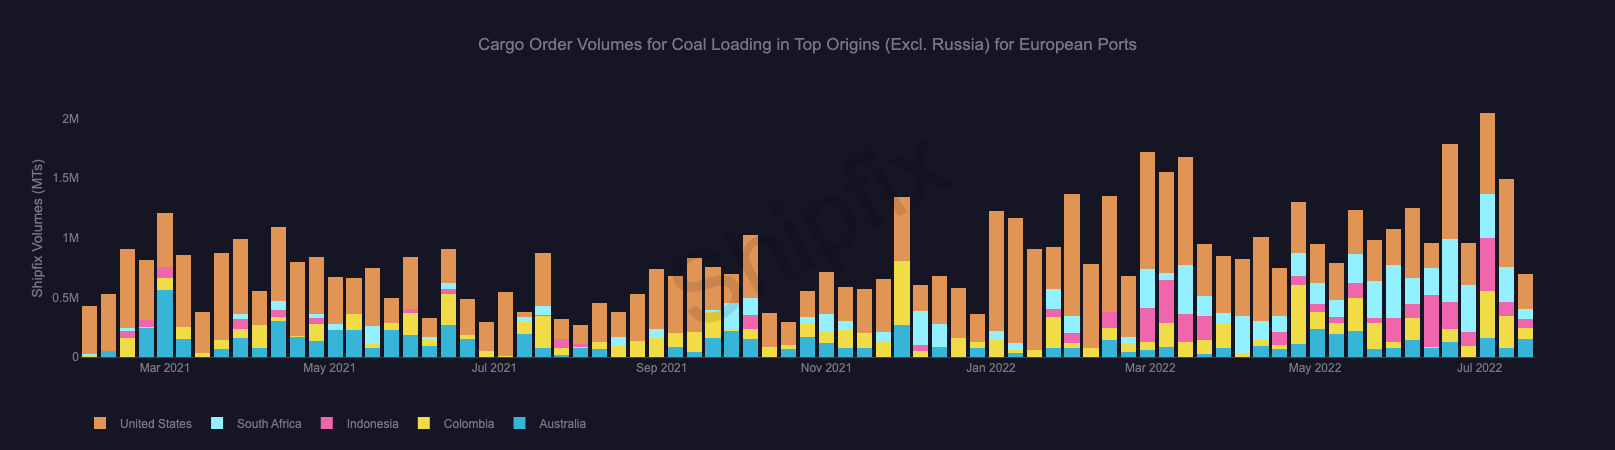 europe_port_coal_loading_from top_origins